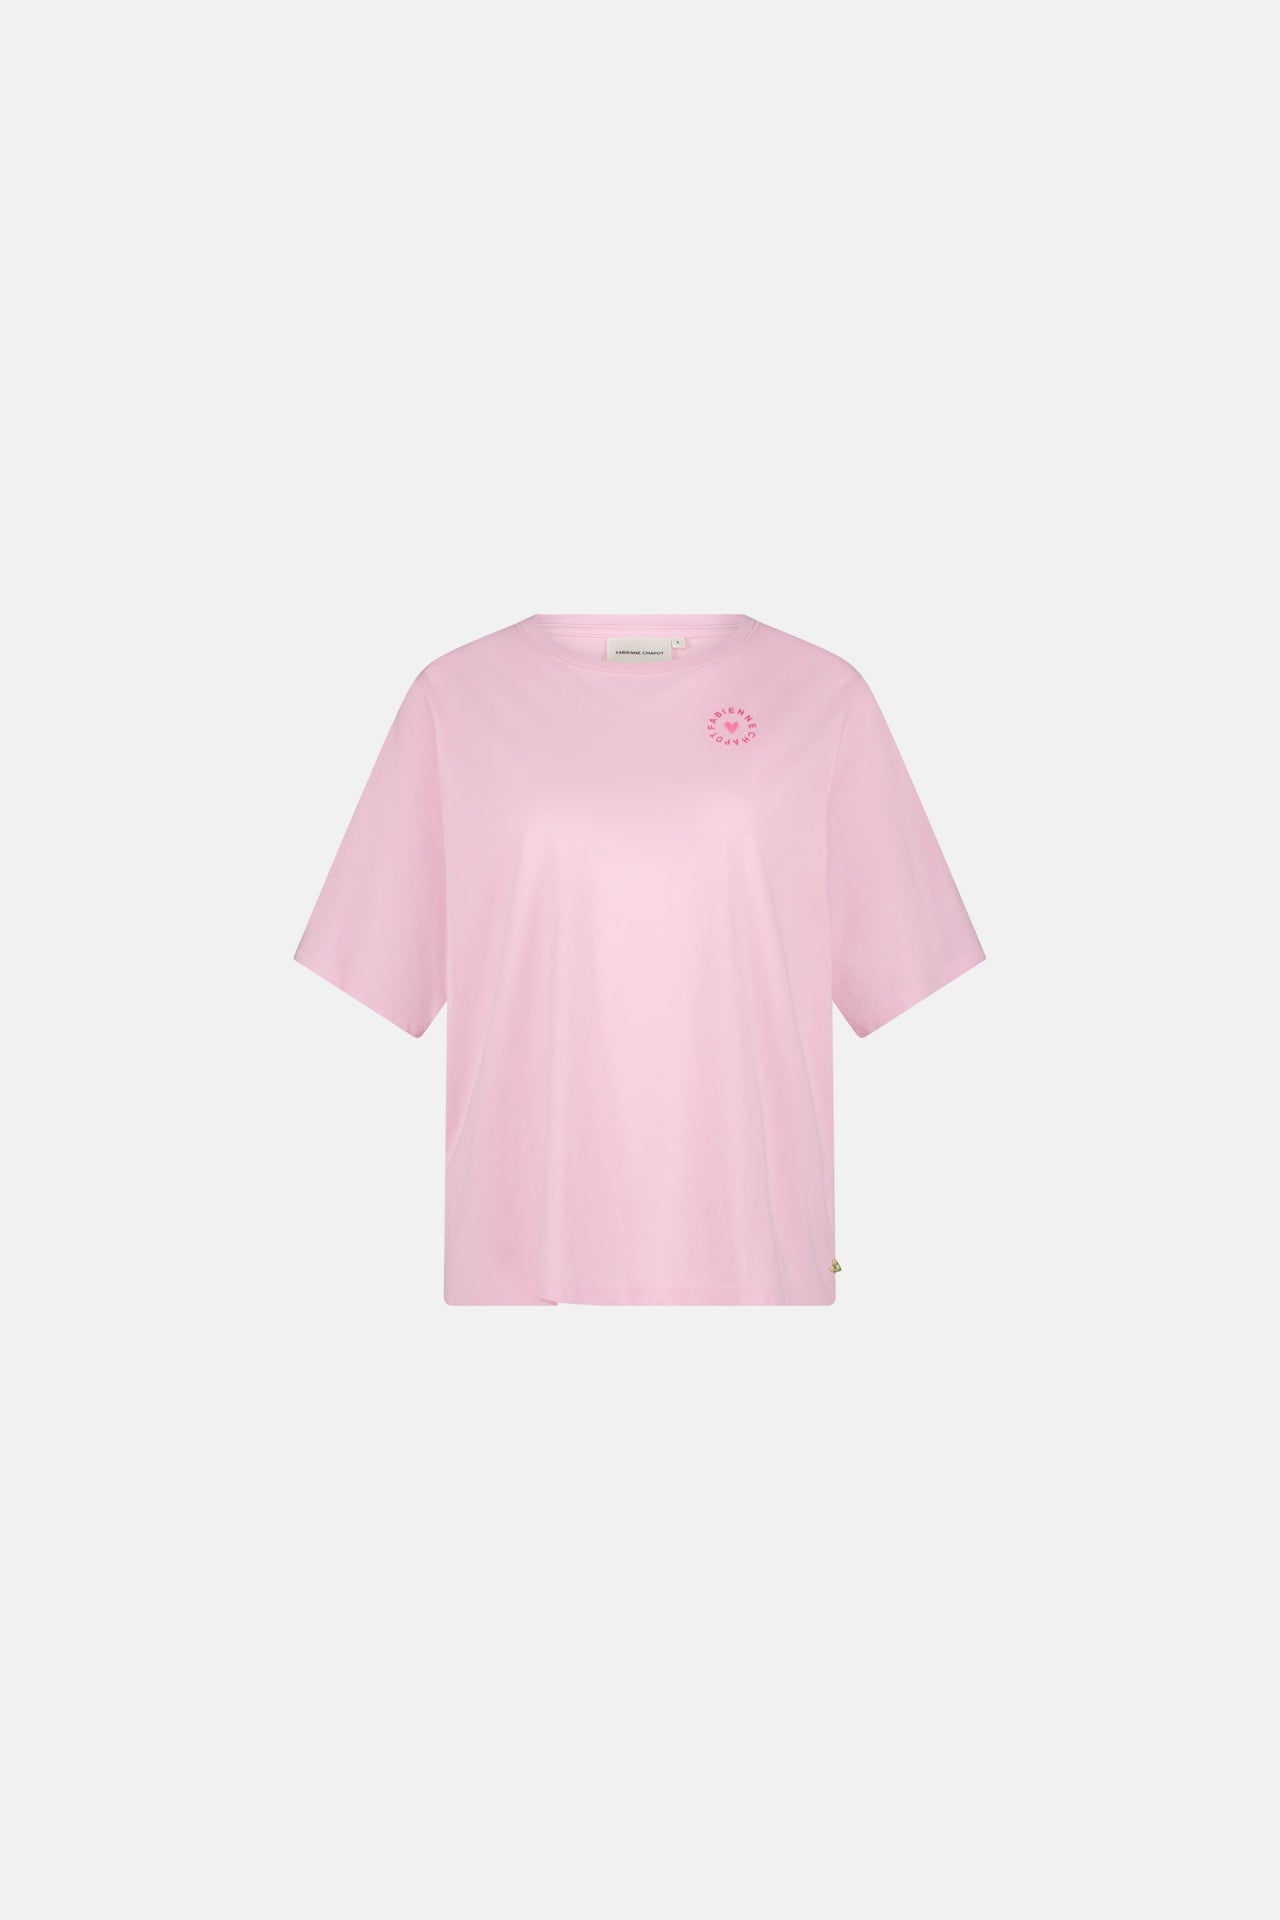 Fay Poem Pink T-shirt | Pink Rose